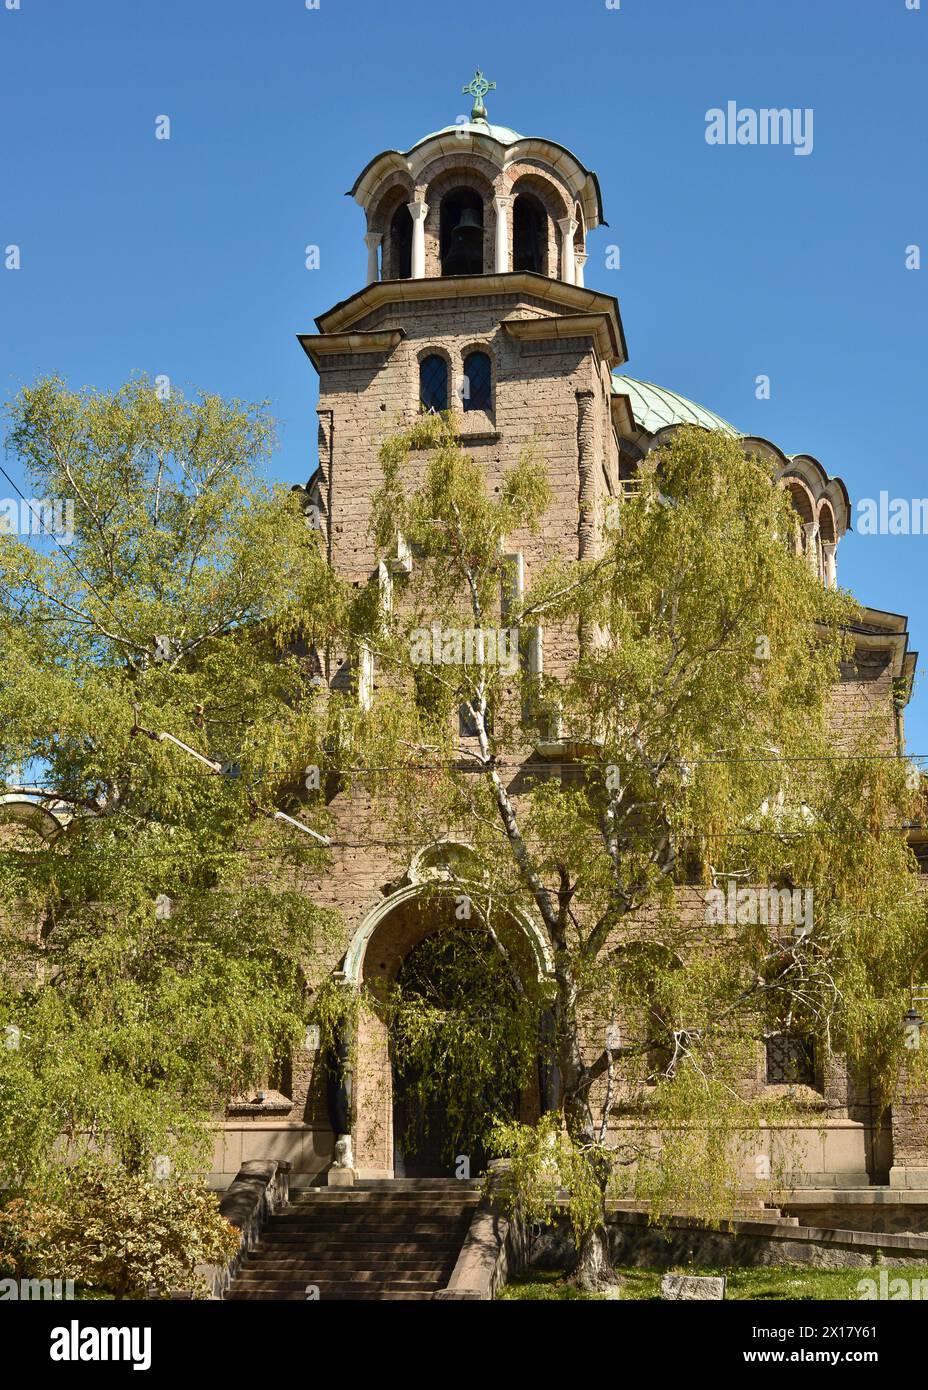 St. Nedelya Orthodoxe Kirche in Sofia Bulgarien, Osteuropa, Balkan, EU Stockfoto